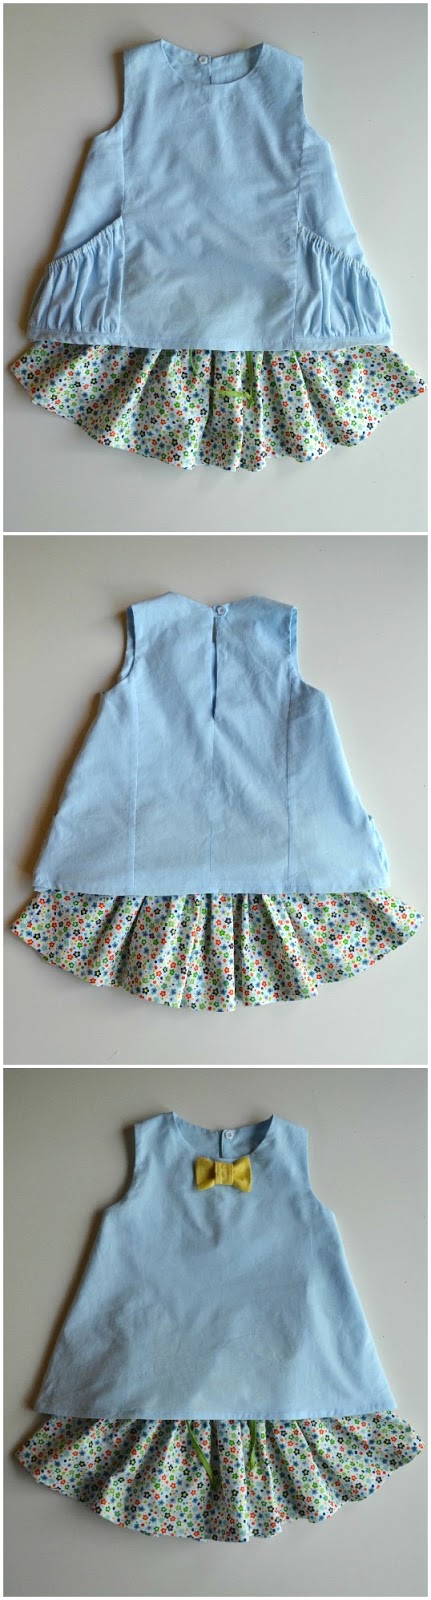 Reversible Bubble Pocket Top and Twirly Skirt | ELEGANCE & ELEPHANTS